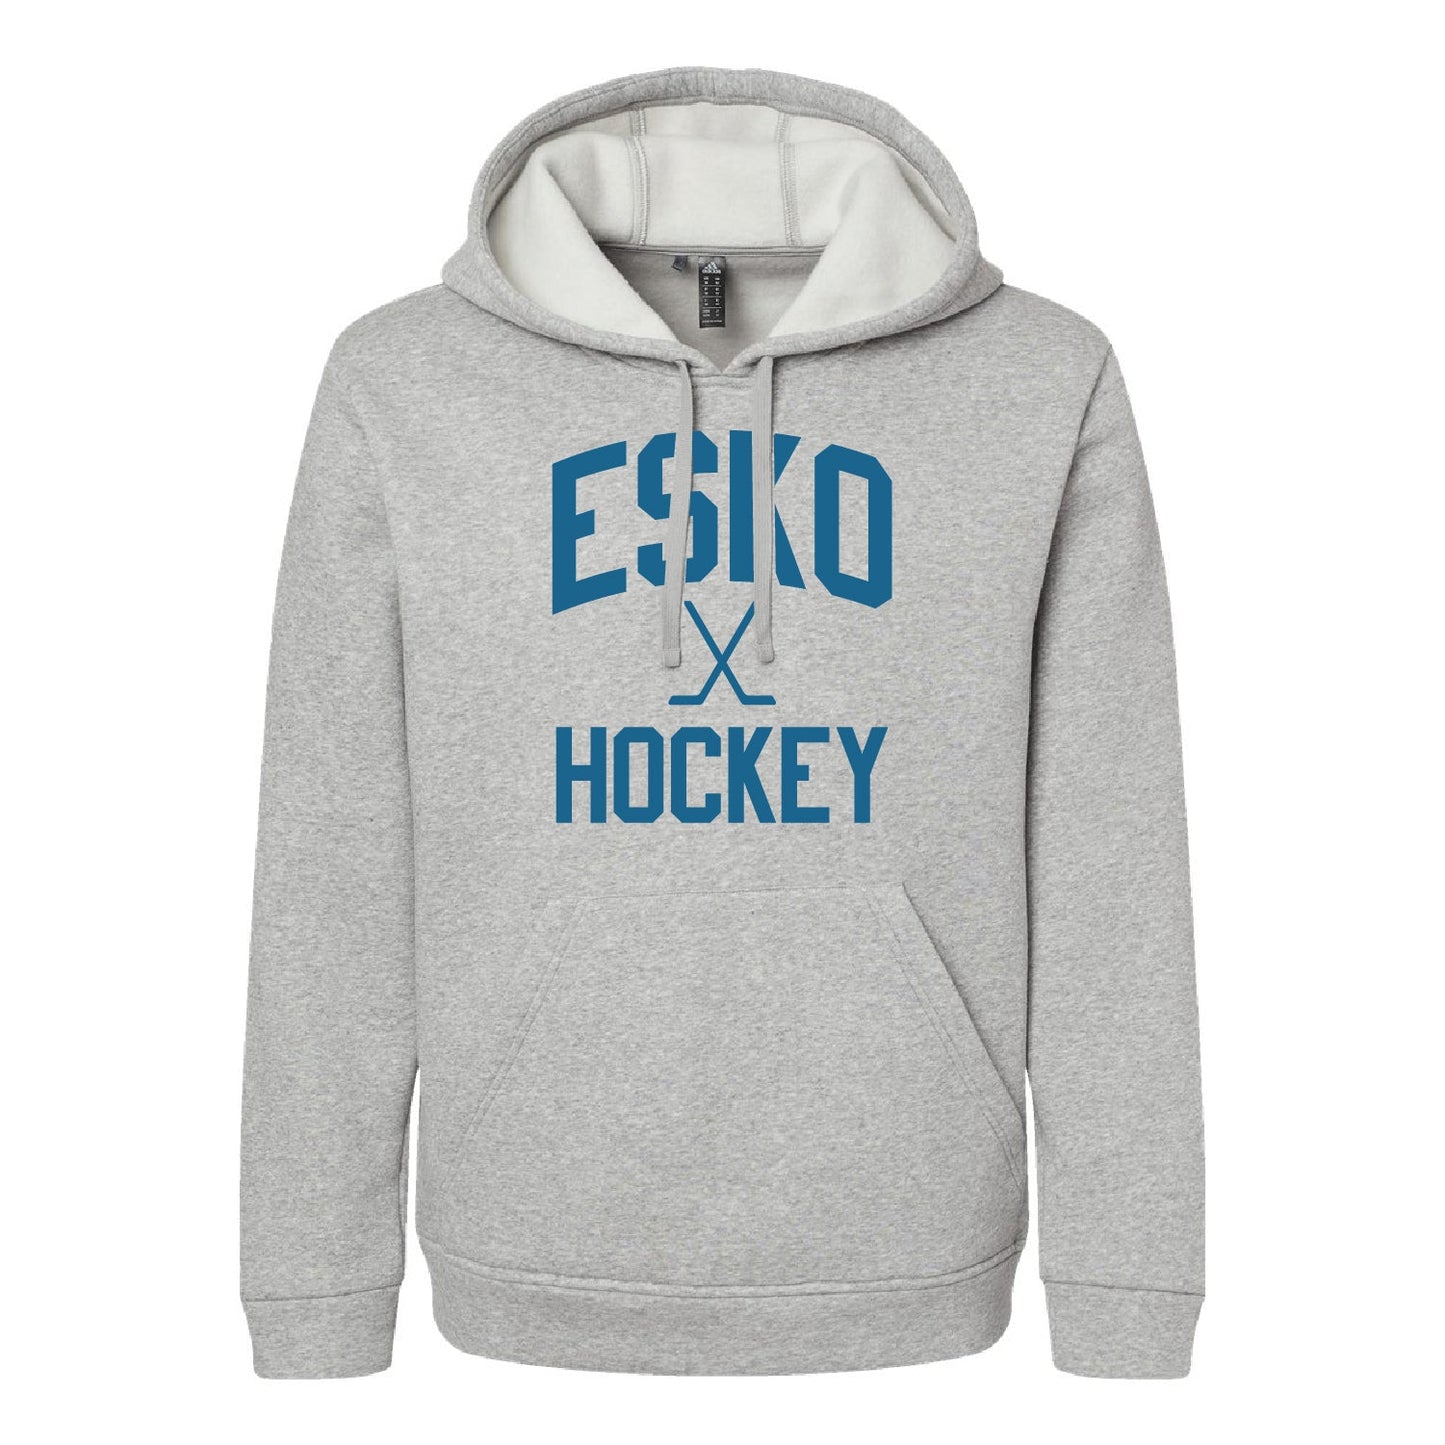 Esko Hockey Fleece Hooded Sweatshirt 2